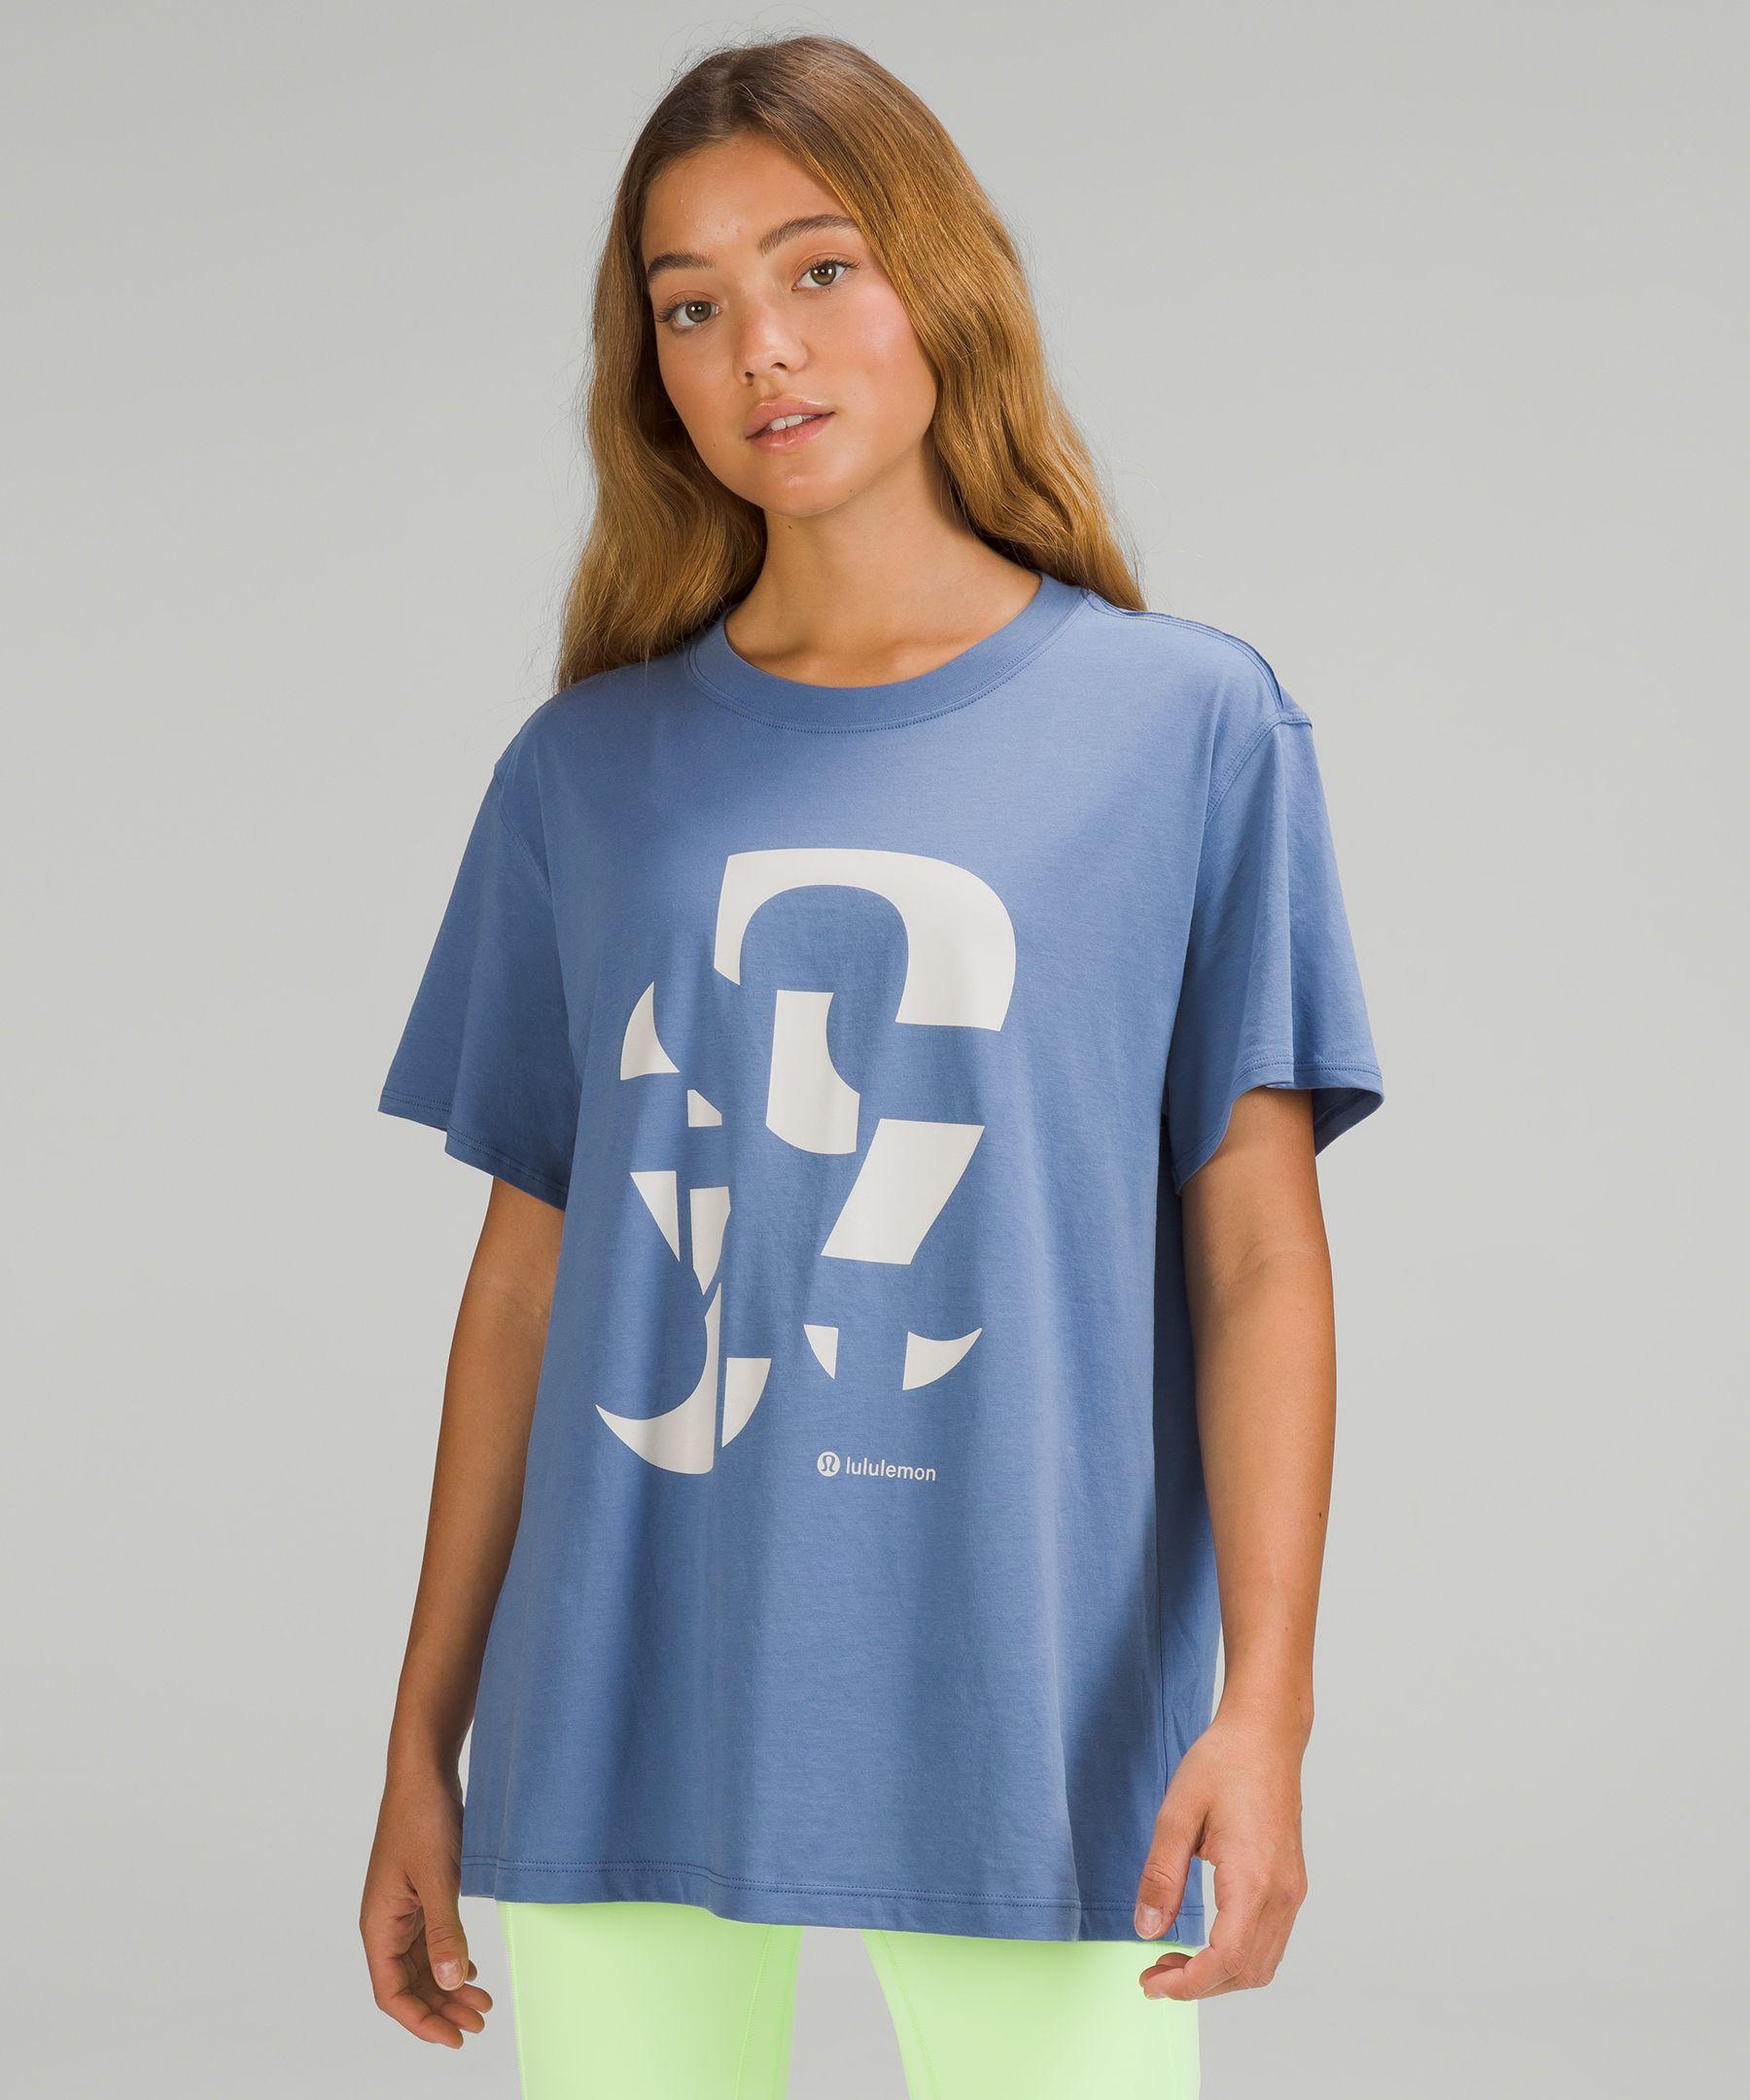 https://cdna.lystit.com/photos/lululemon/86a70751/lululemon-athletica-designer-Water-Drop-All-Yours-Short-Sleeve-T-shirt-Graphic.jpeg